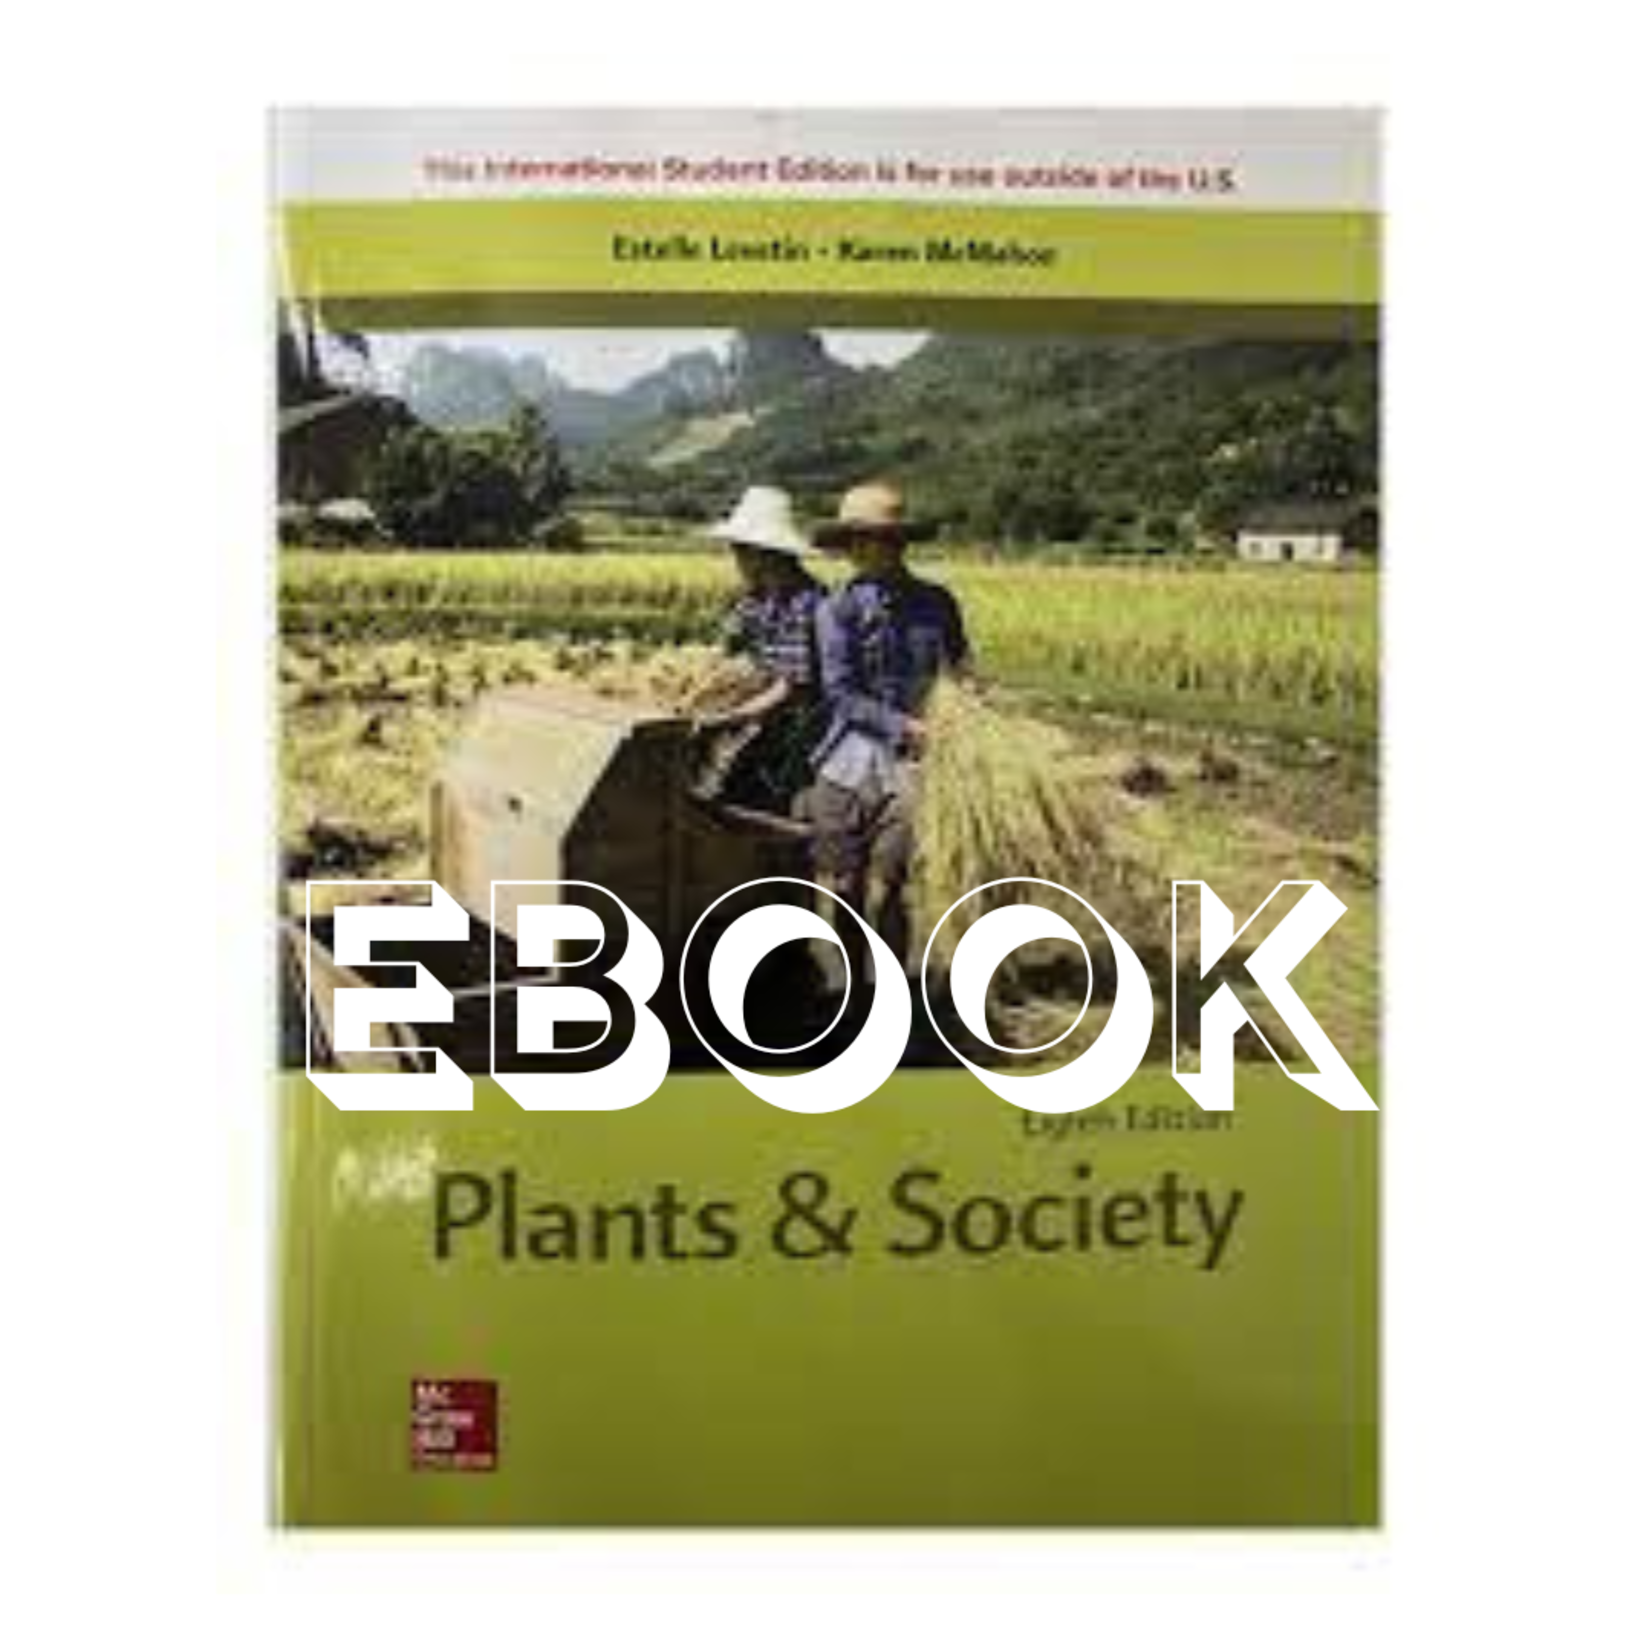 McGraw-Hill Plants & Society EBOOK